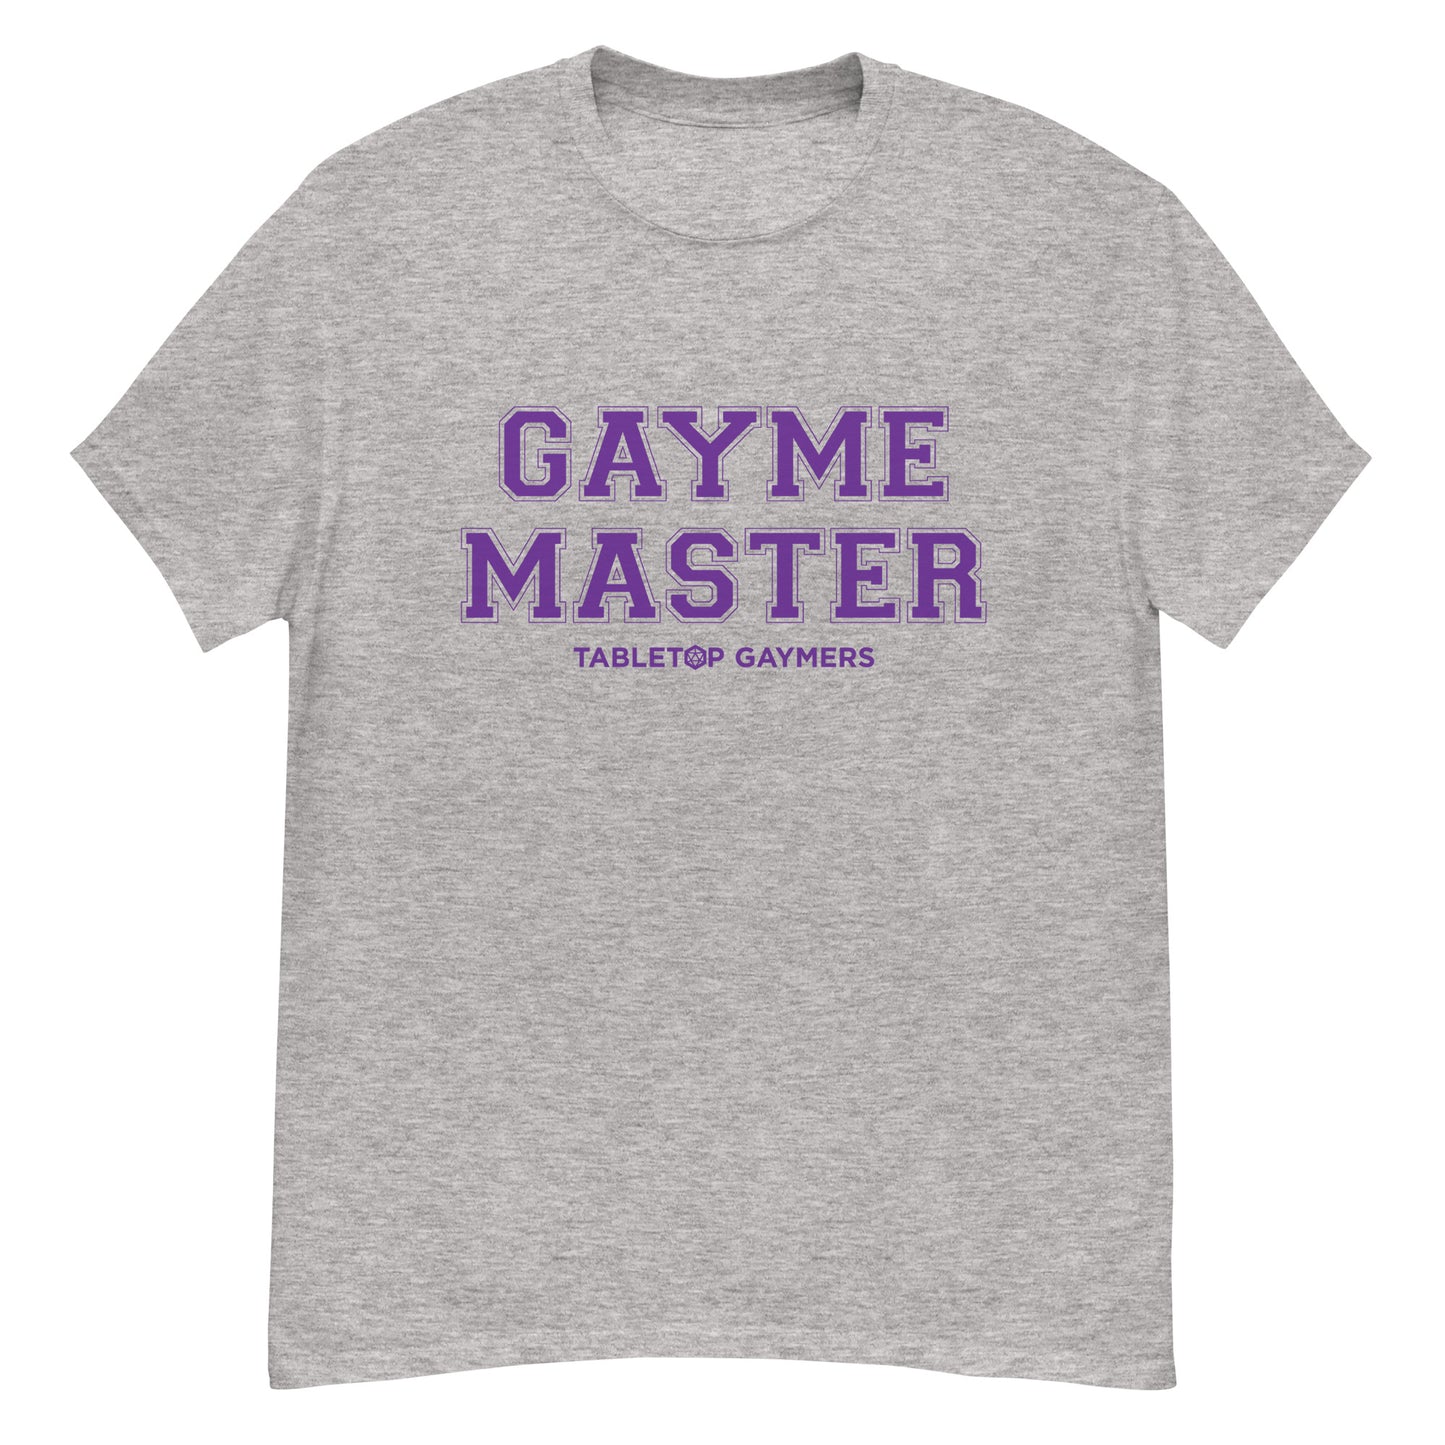 Gayme Master